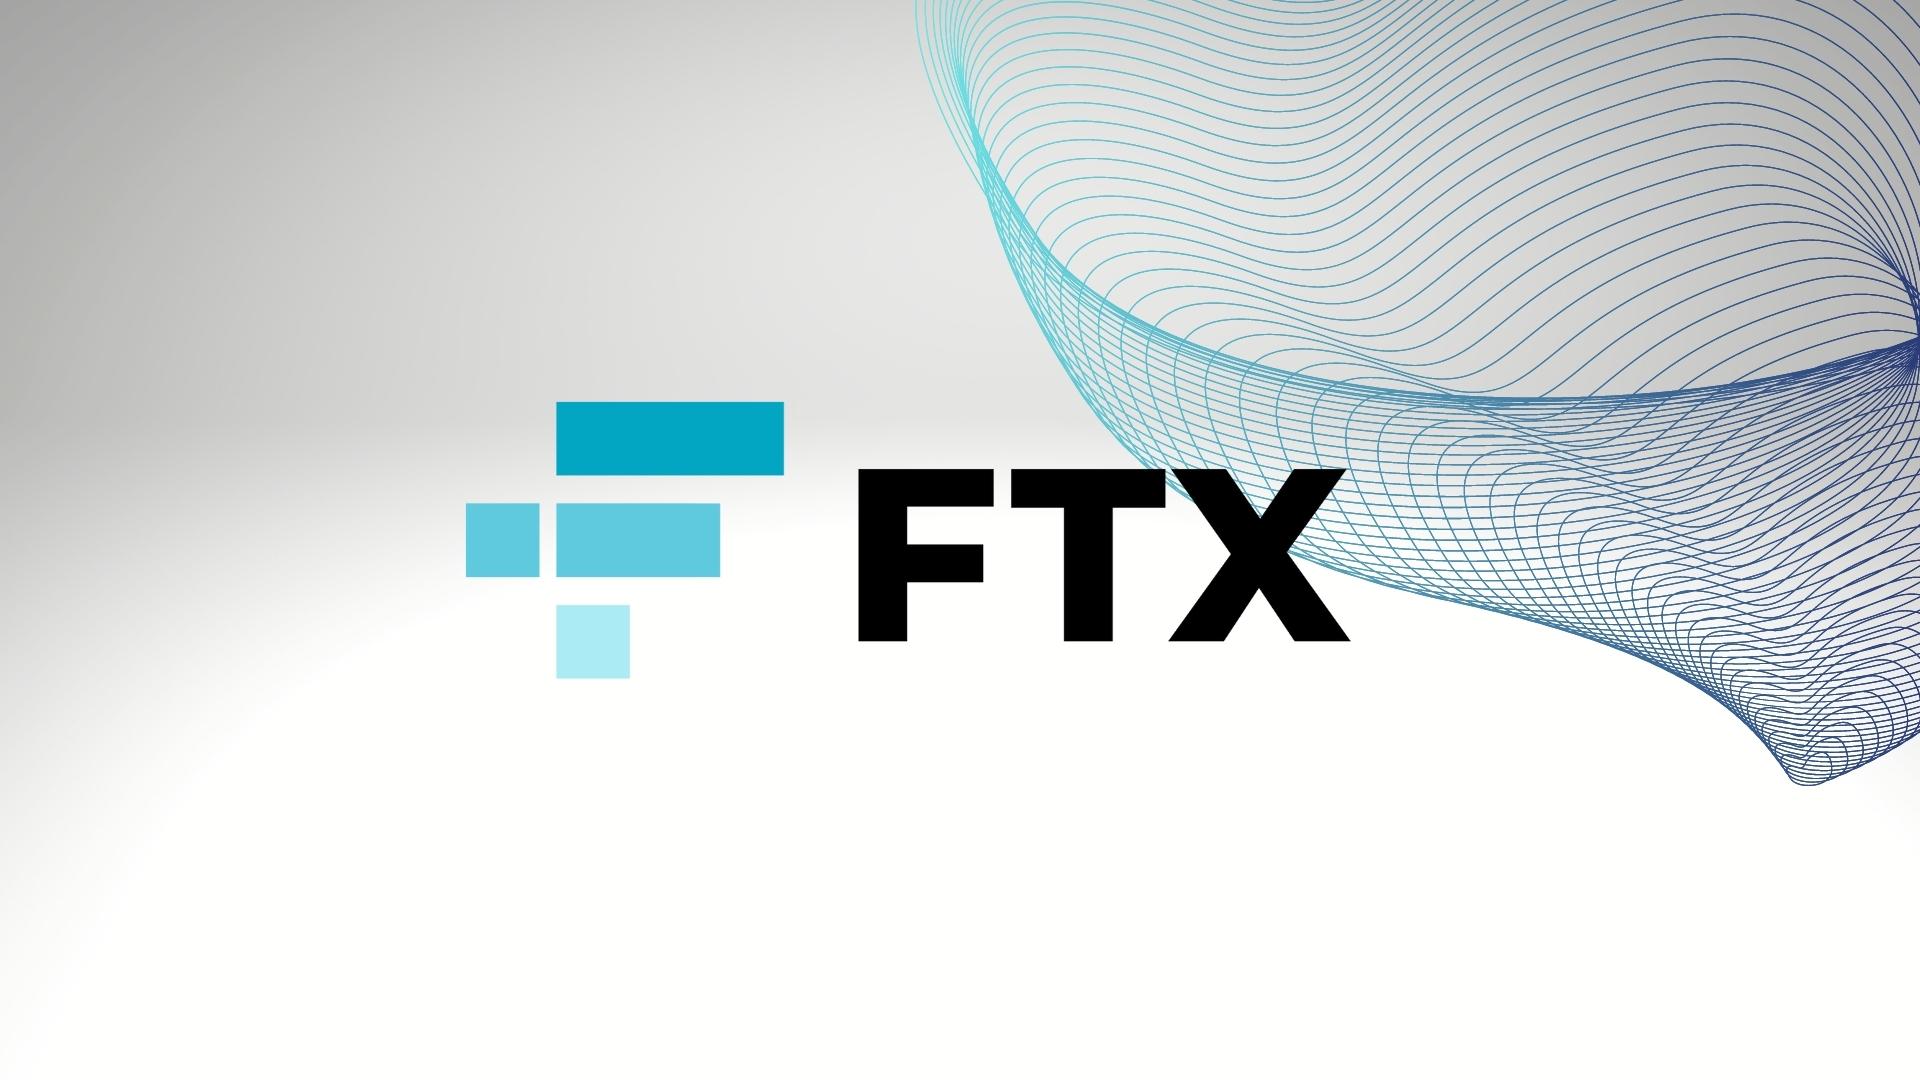 FTX привлекли $400 млн при оценке в $32 млрд.